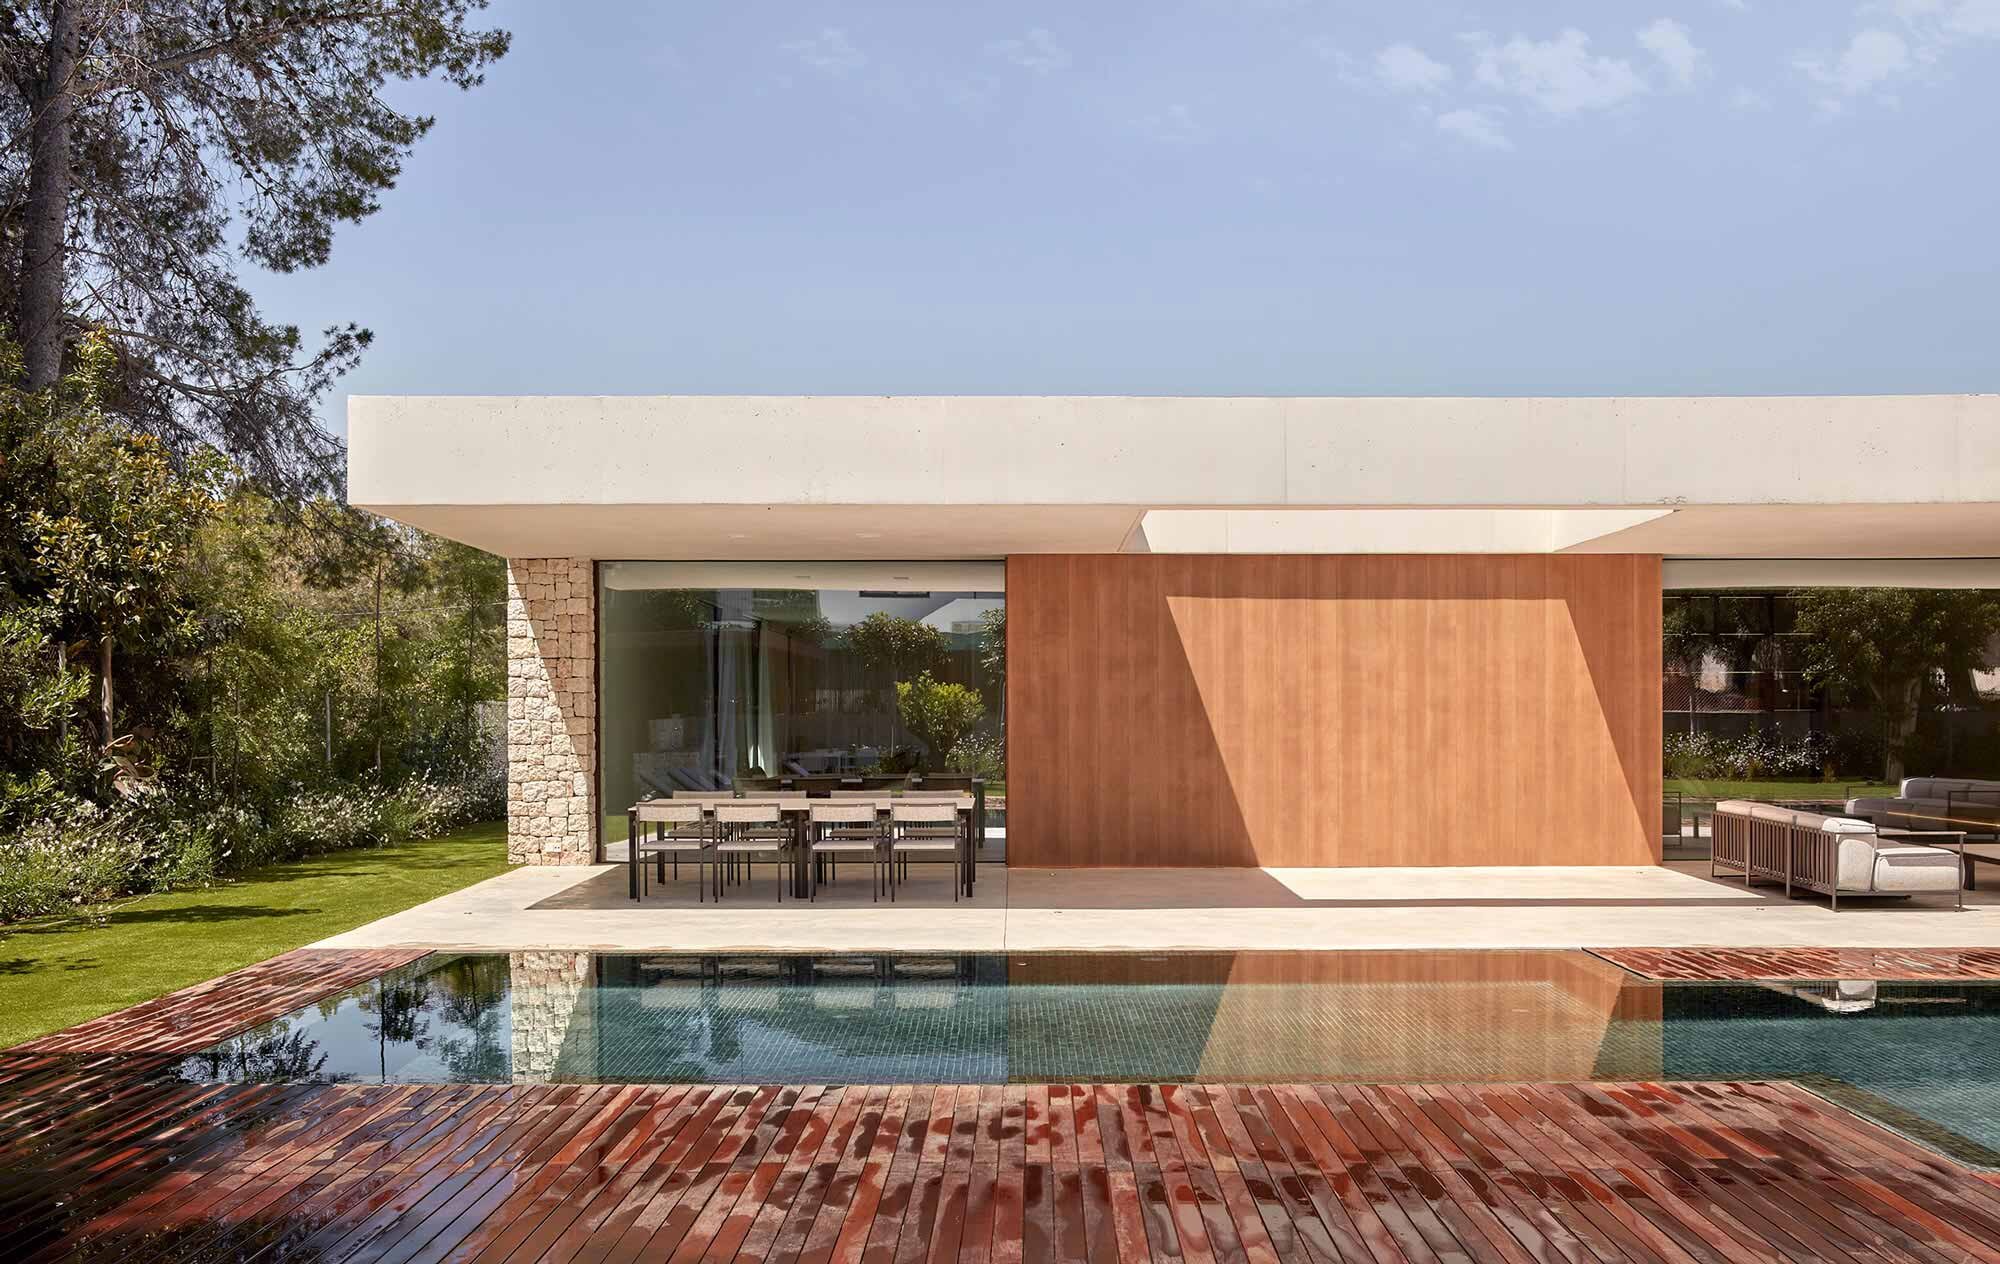 Ramon Esteve Estudio - House in La Cañada-Visual Atelier 8-Architecture-11.jpg